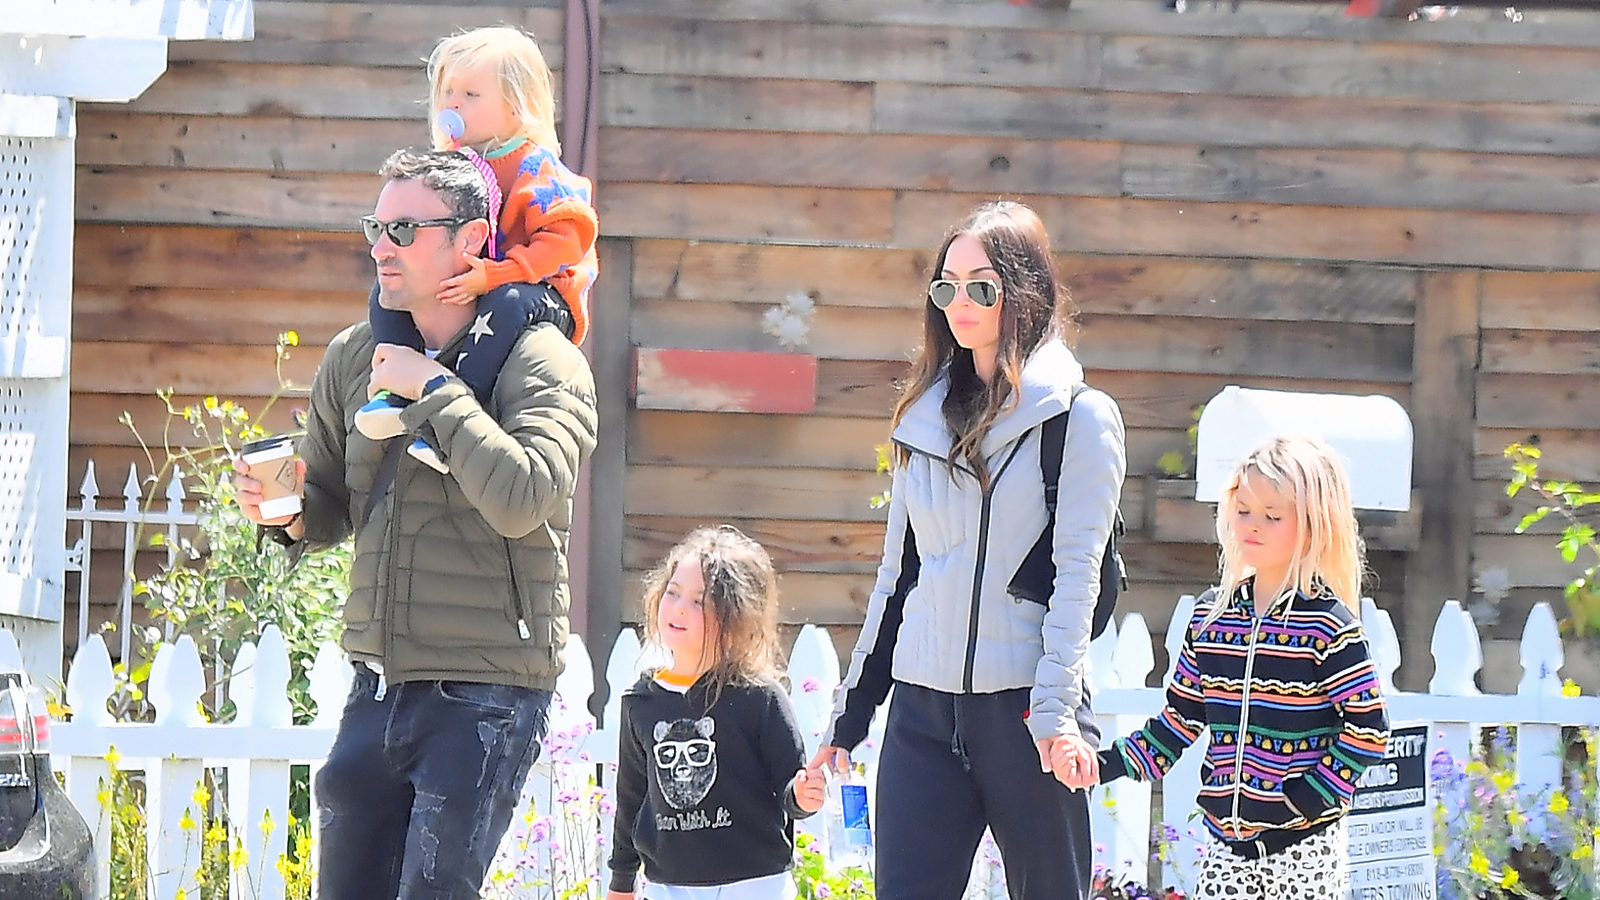 Megan Fox And Brian Austin Green Go Shopping With Their Kids